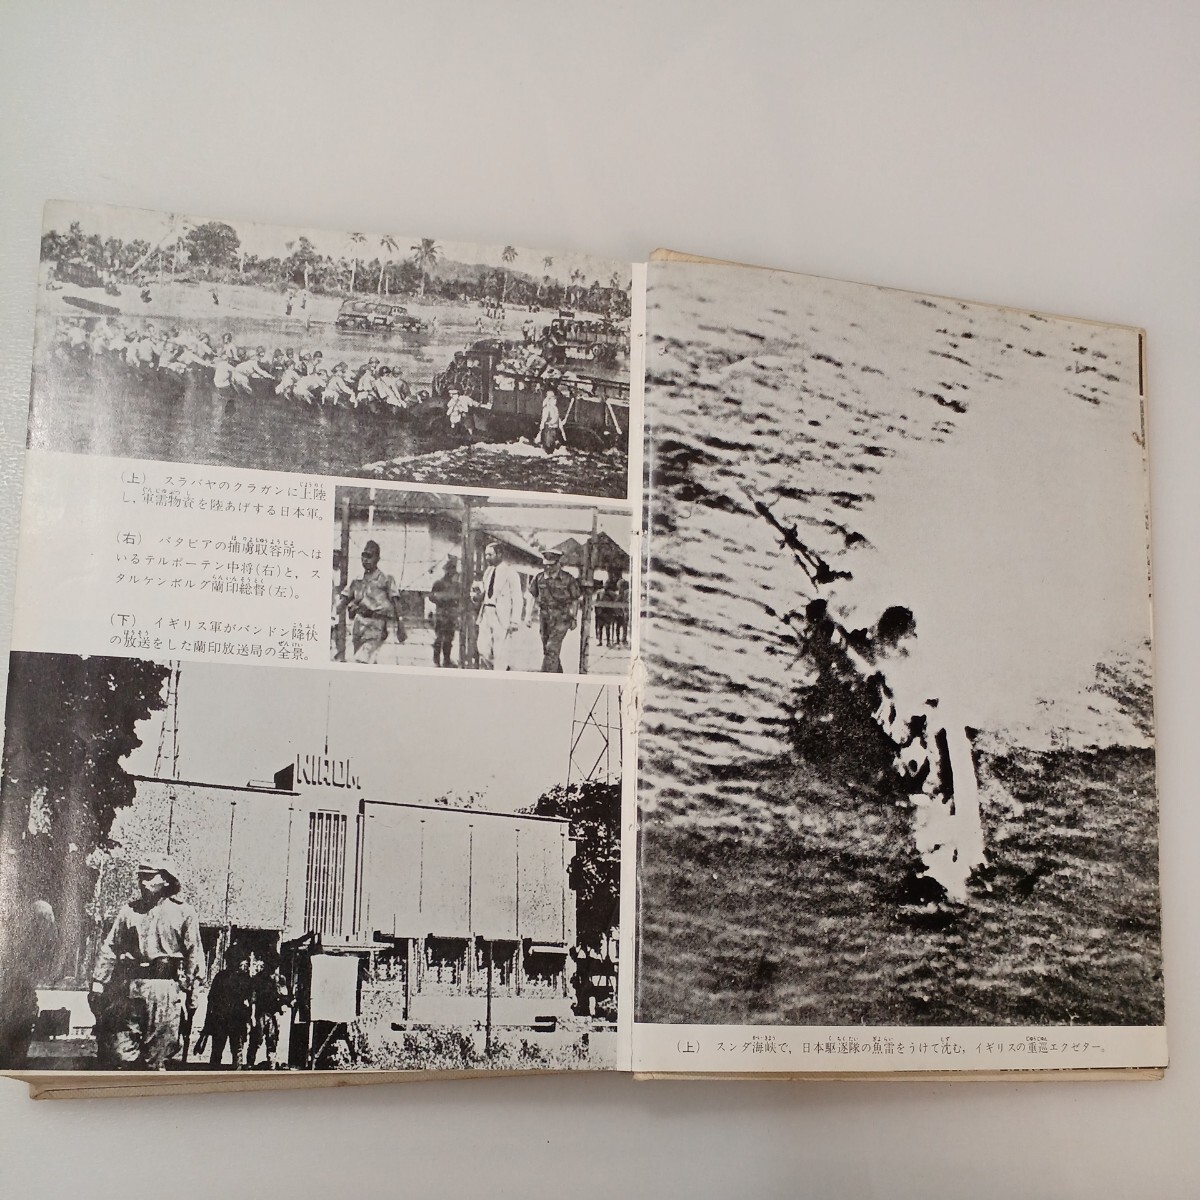 zaa-567♪南太平洋の激戦 (少年少女太平洋戦争の記録2) (ハードカバー) 棟田博/秋永芳郎(著) あかね書房 (1968/12/5)の画像3